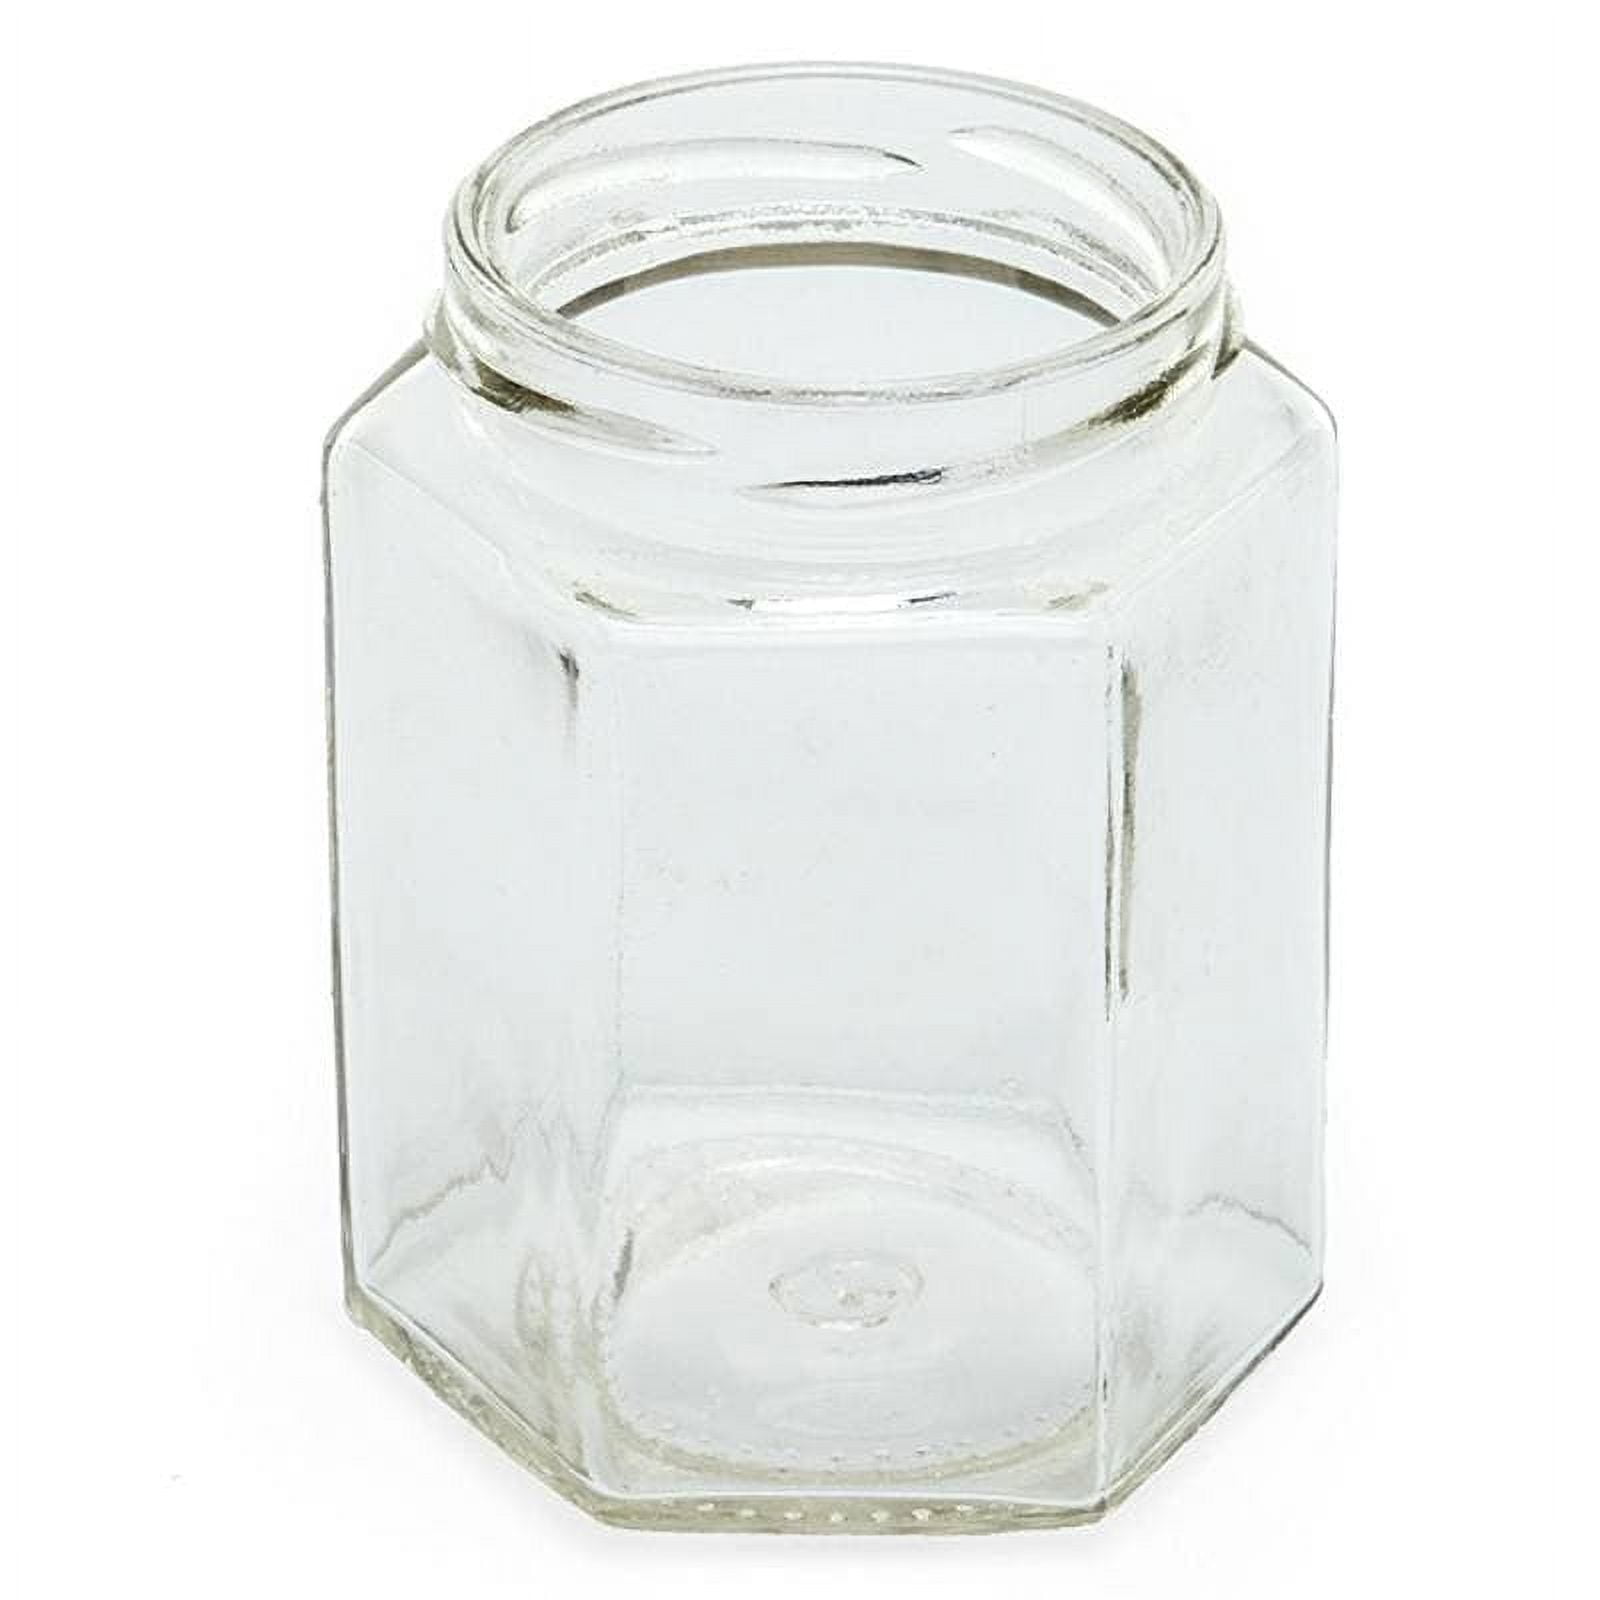 CUCUMI 24pcs 2oz Small Clear Glass Bottles with Lids for Liquids